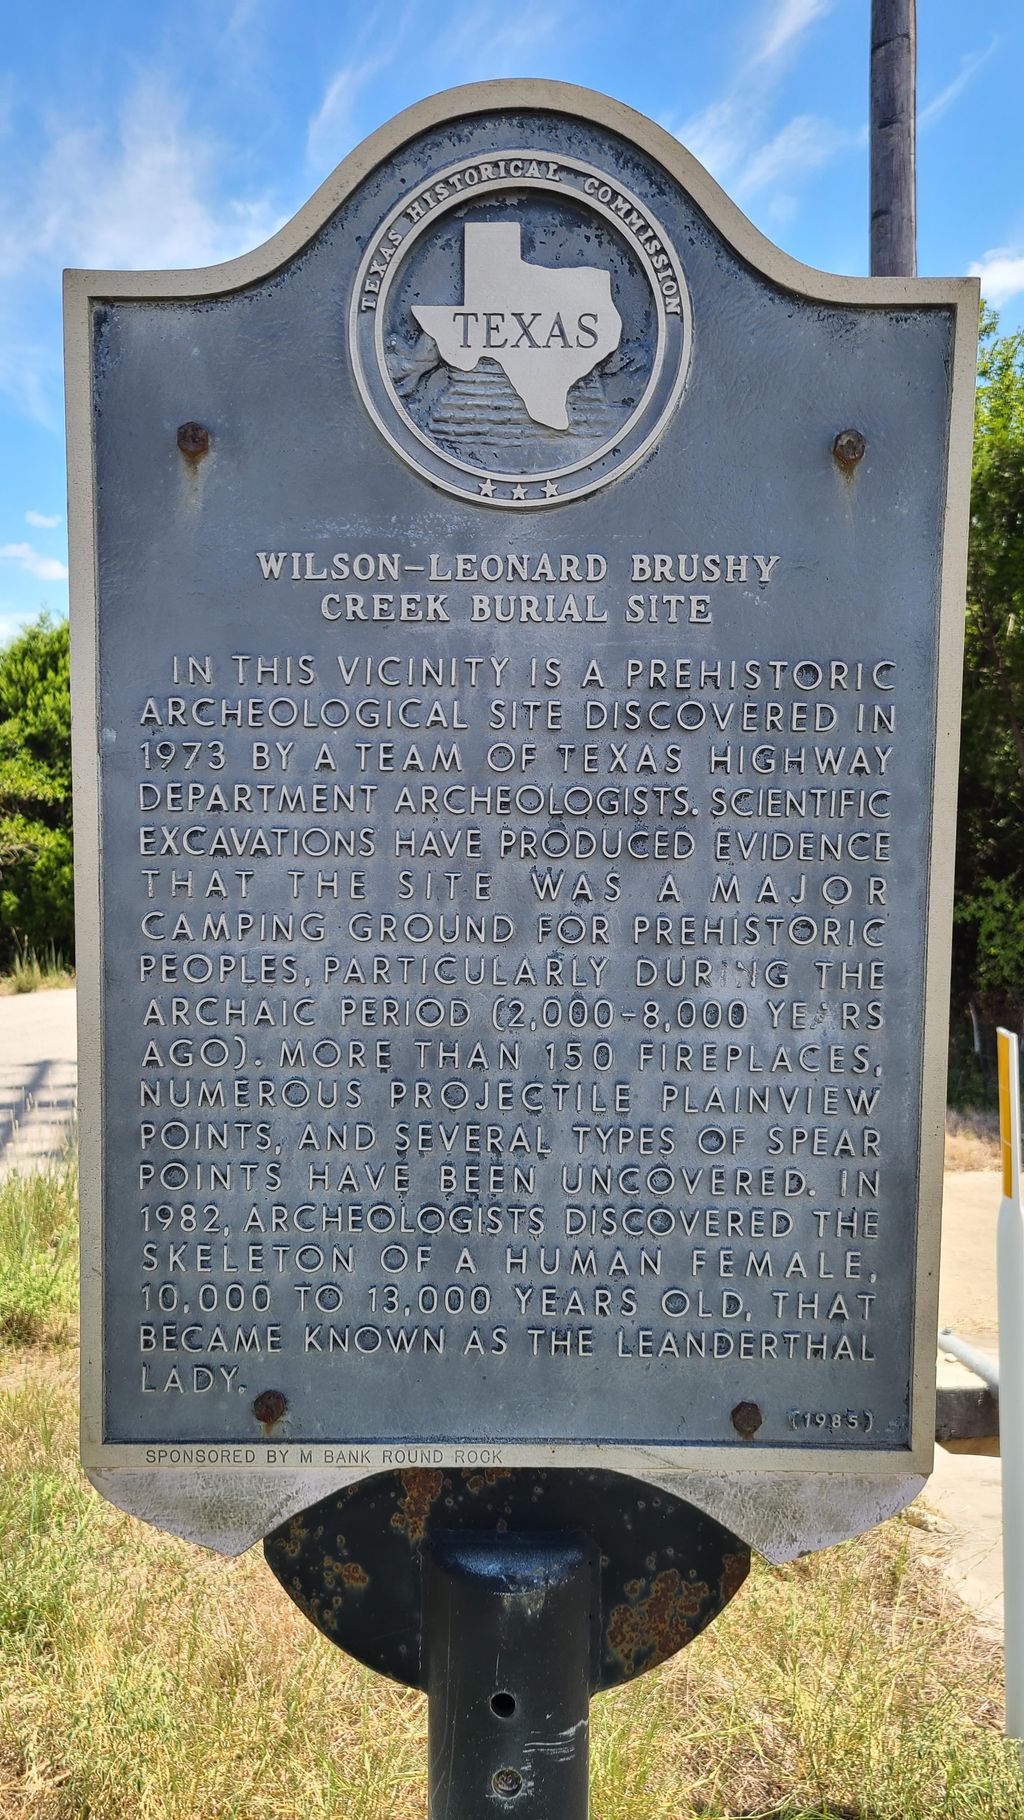 Wilson-Leonard Brushy Creek Burial Site